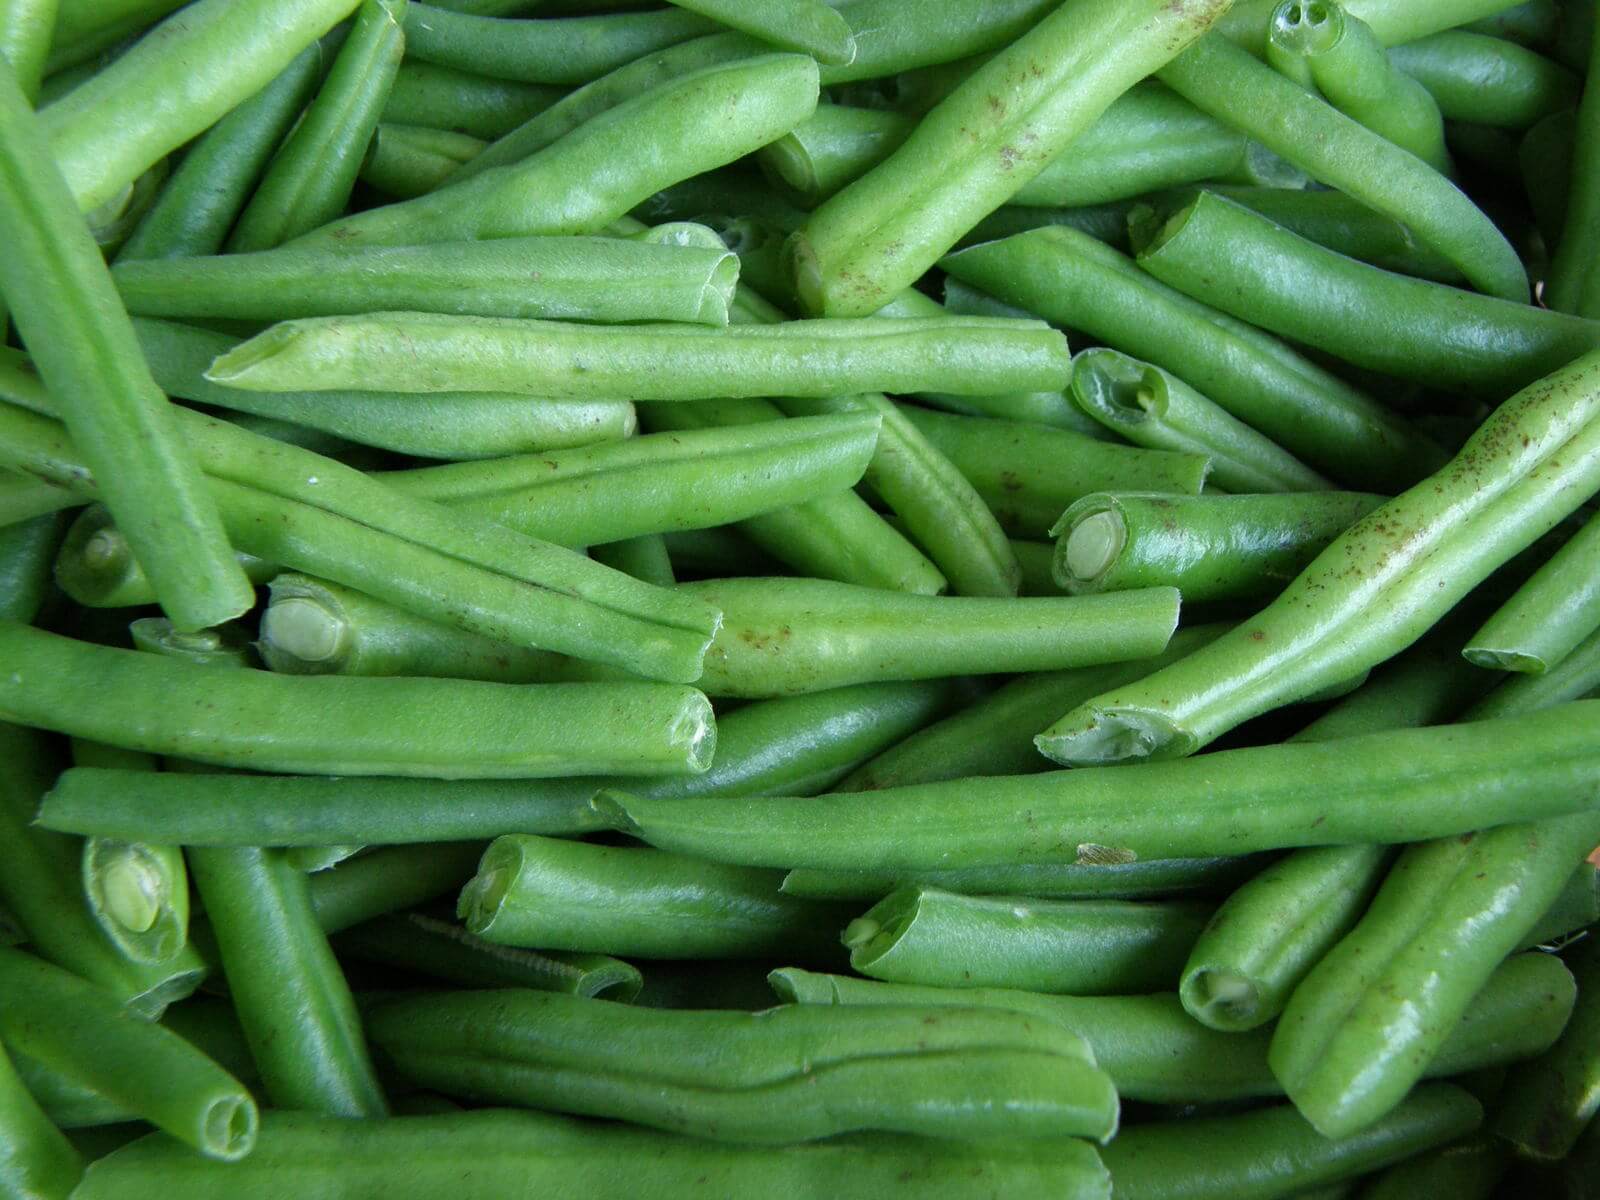 fasole verde pastai - green beans